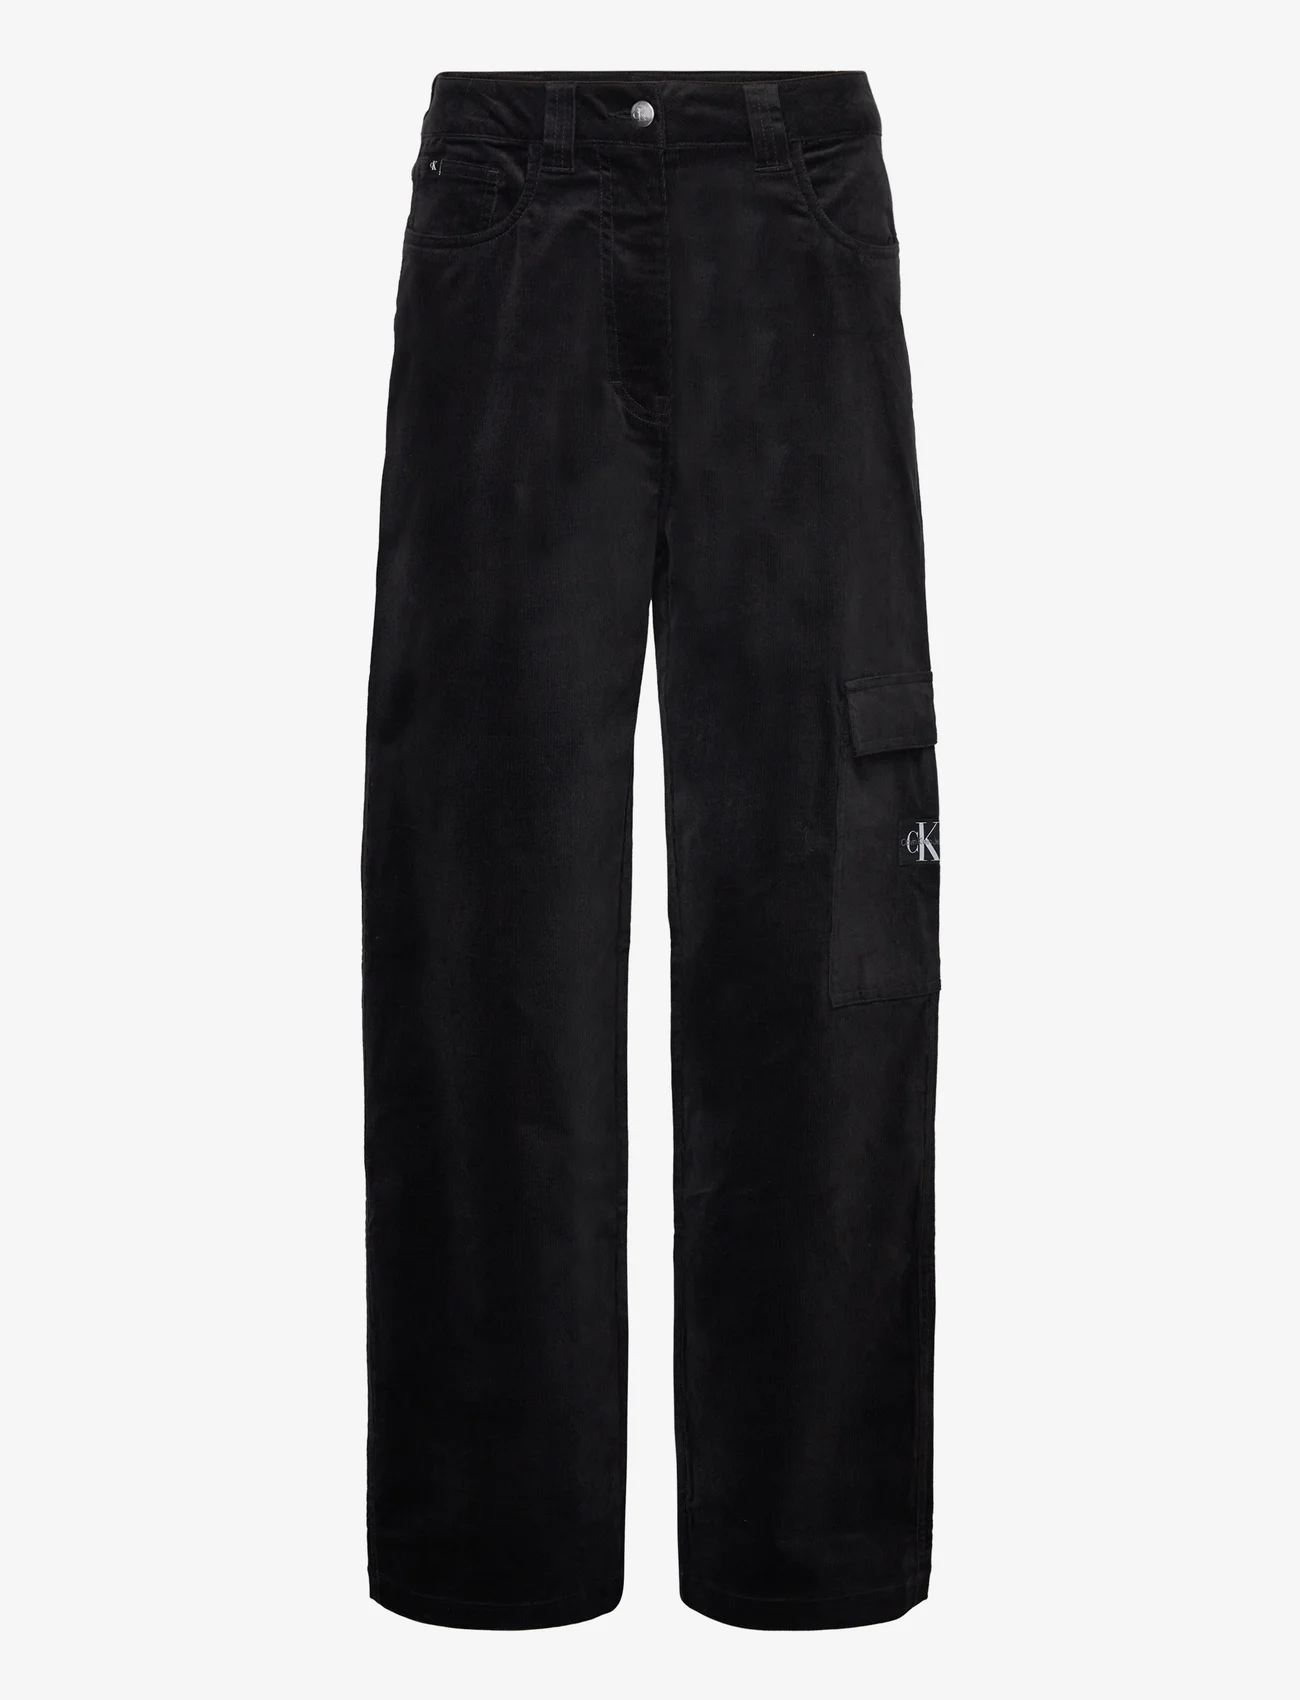 Calvin Klein Jeans - HIGH RISE CORDUROY PANT - cargo pants - ck black - 0